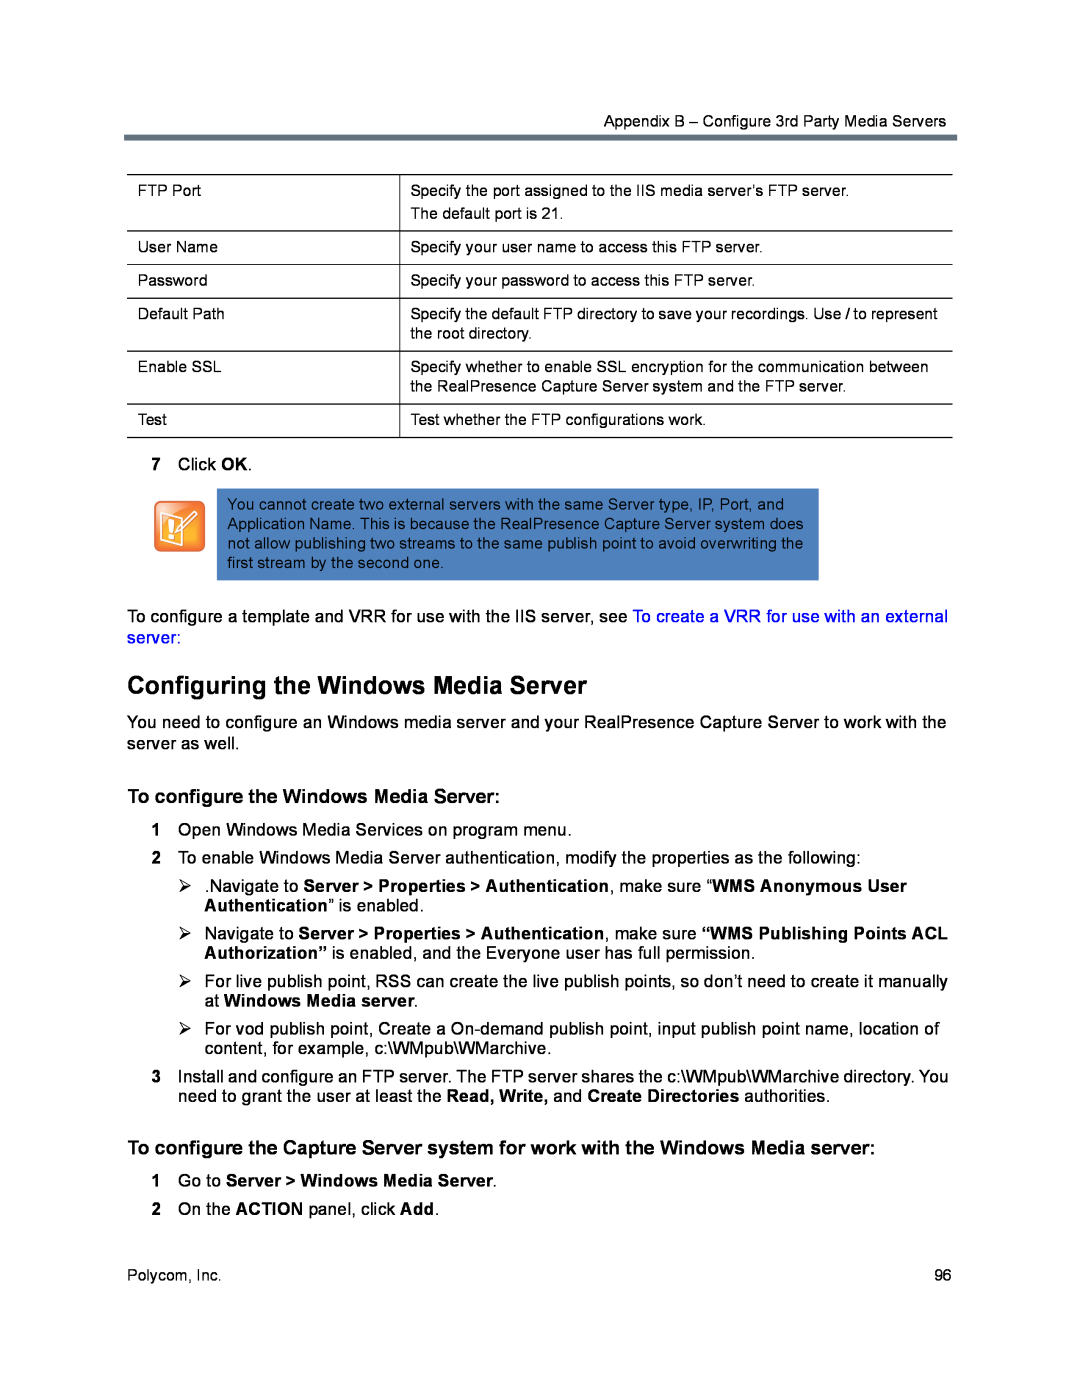 Polycom 40/0 manual Configuring the Windows Media Server, To configure the Windows Media Server 